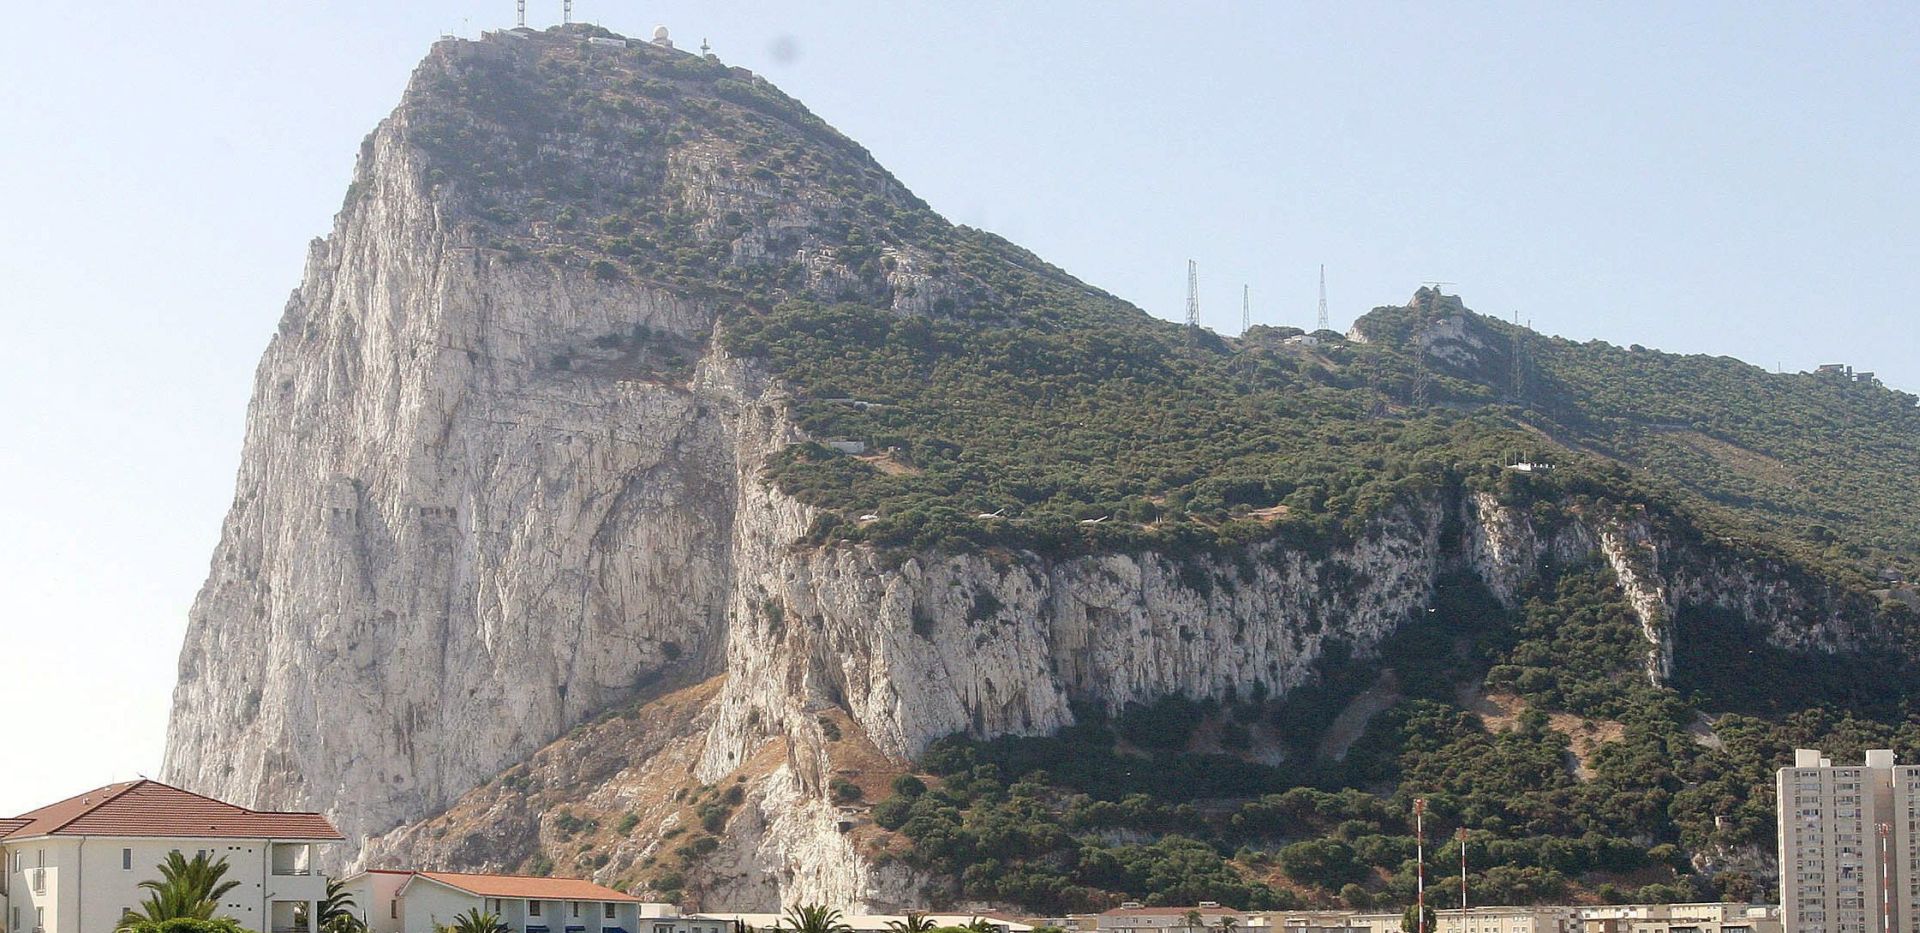 MAY Britanija “čvrsto predana” Gibraltaru